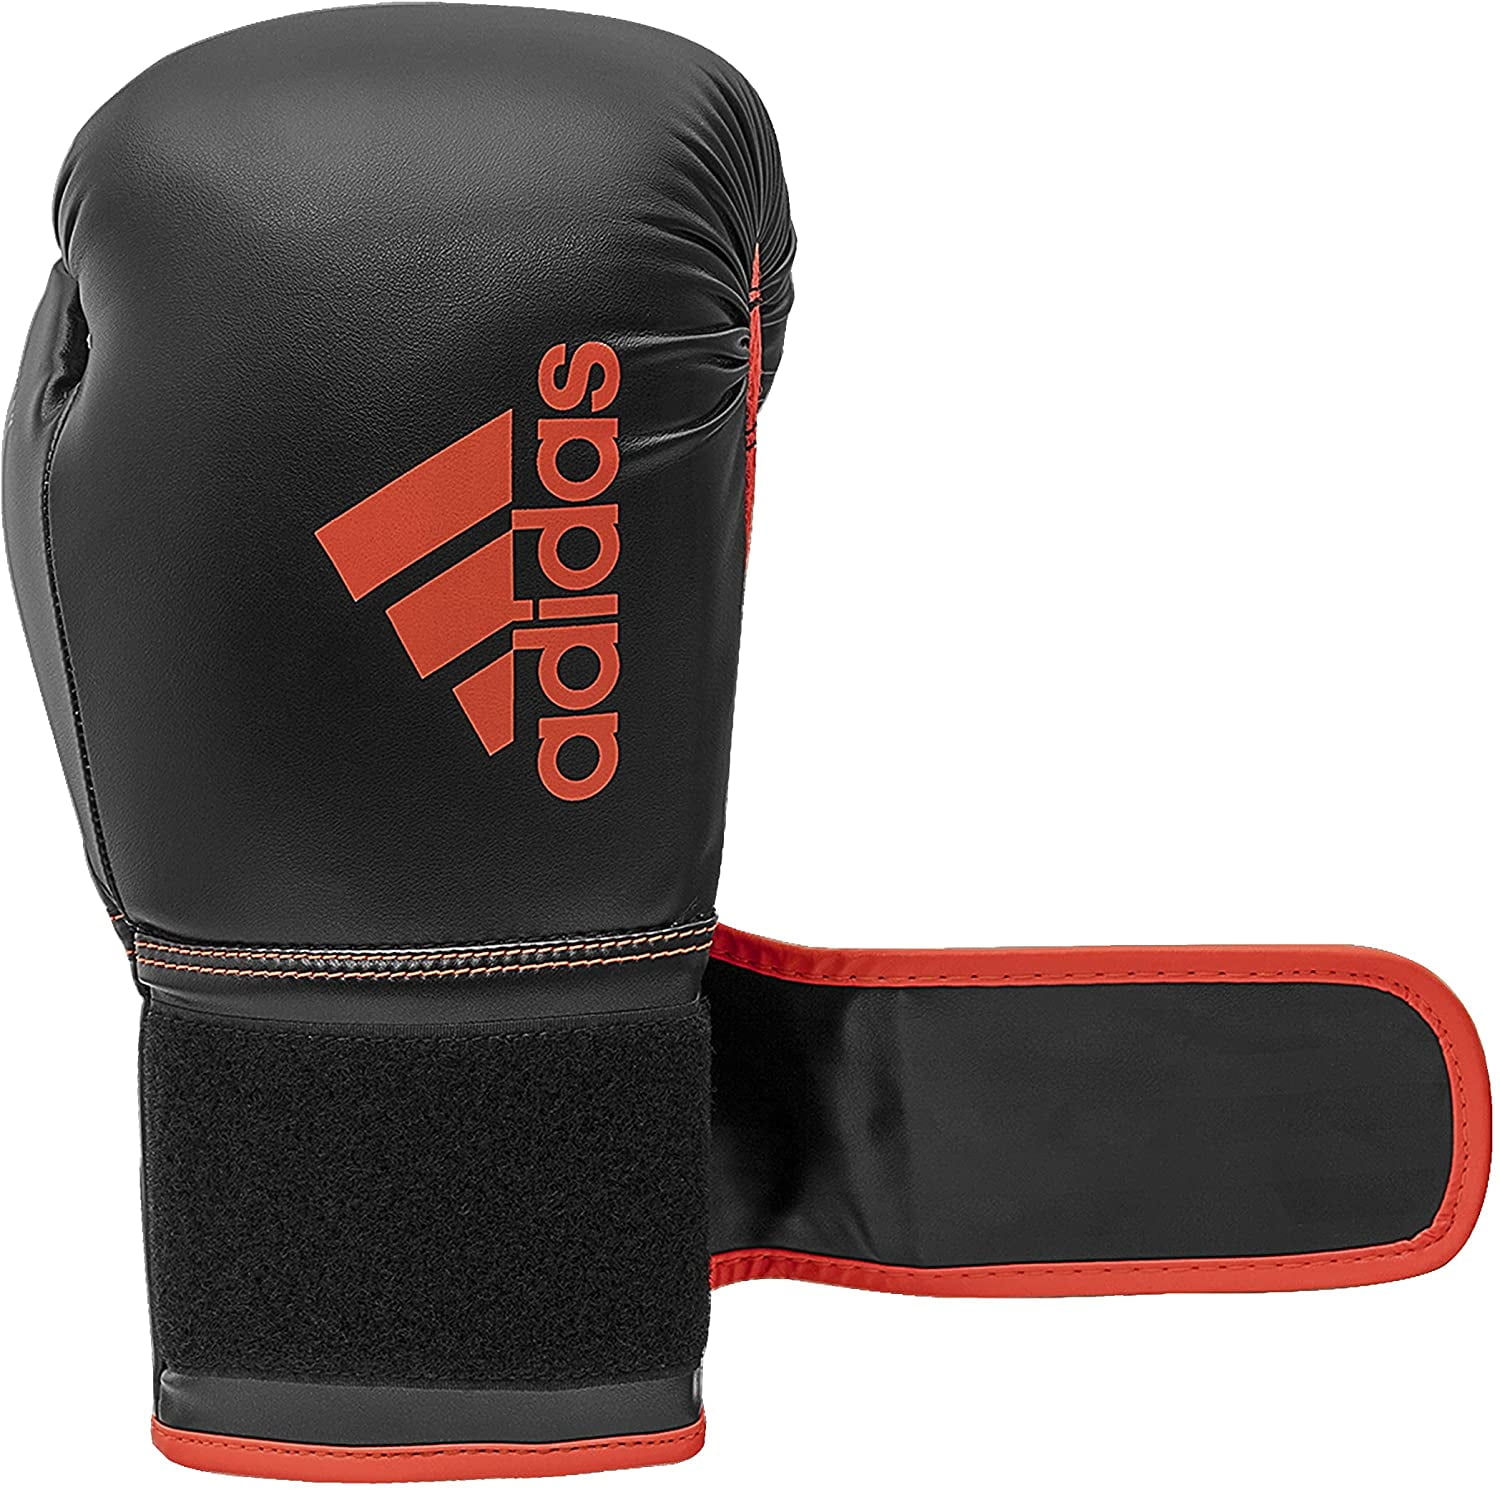 set Boxing Women Gloves - Sparring pair 80 Gloves Adidas for Kickboxing Training and Men, Gloves, Kids Hybrid - for